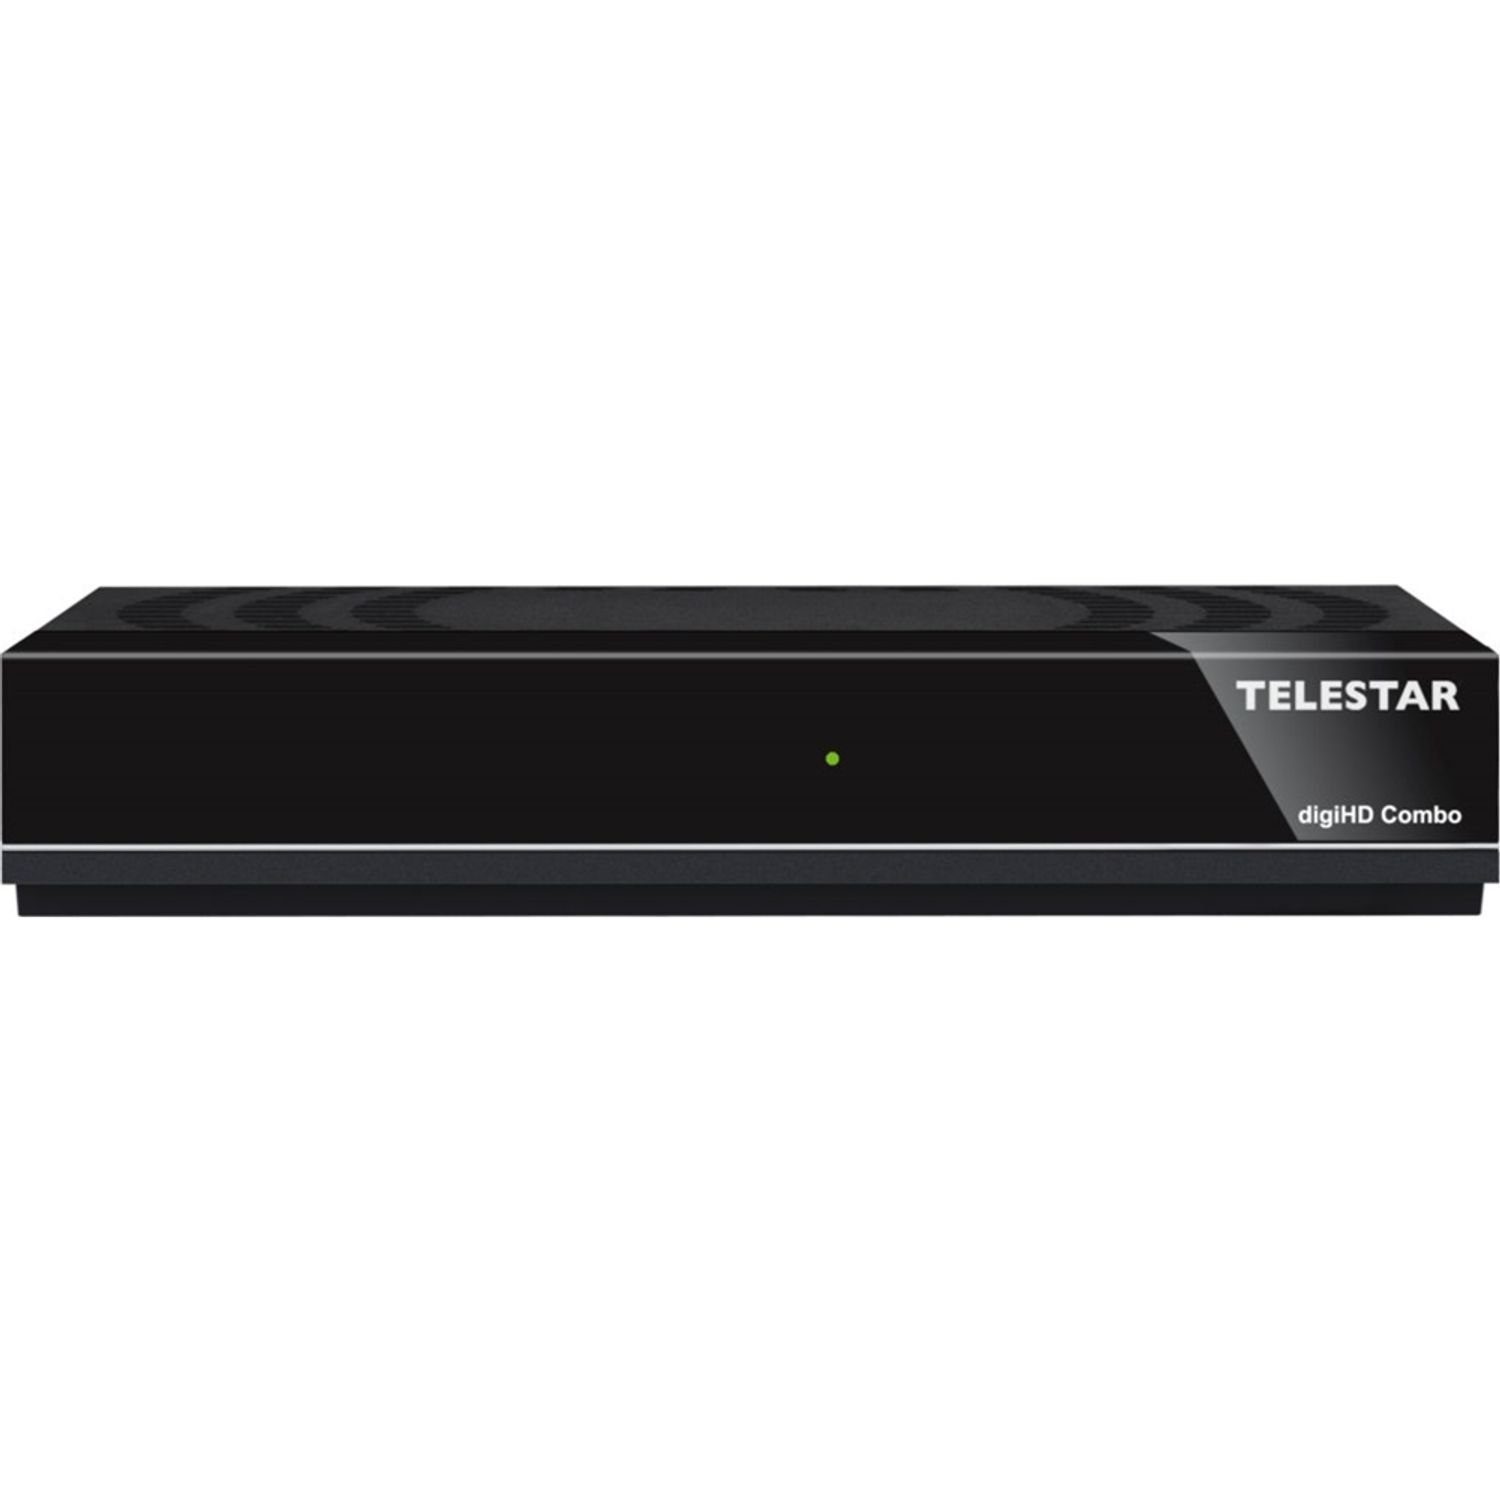 TELESTAR digiHD Combo Receiver mit Kabel-Receiver Mediaplayerfunktion DVB-C/DVB-T2